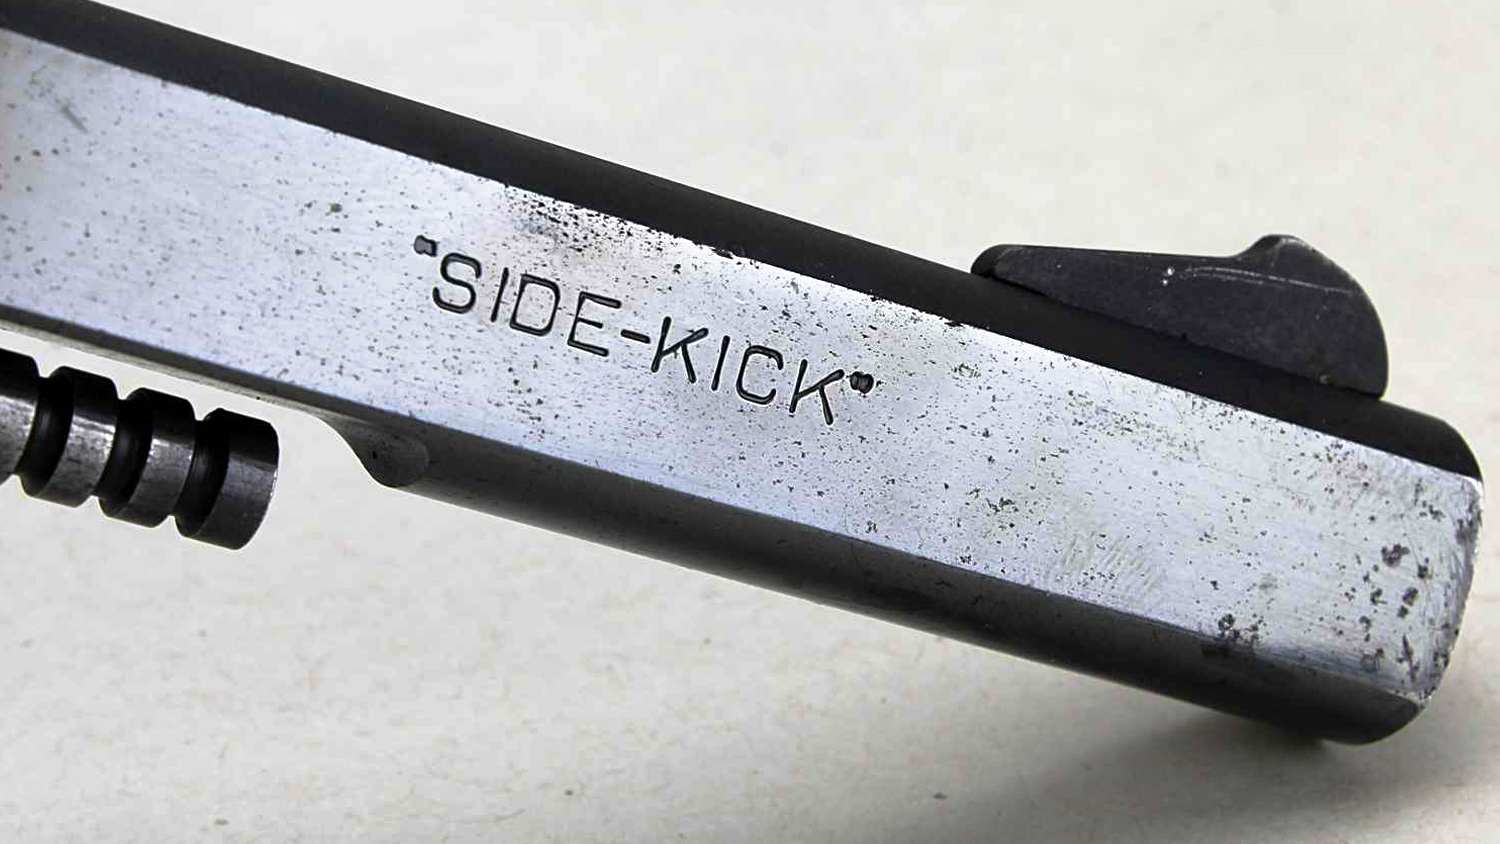 H&amp;R Model 929 Side-Kick